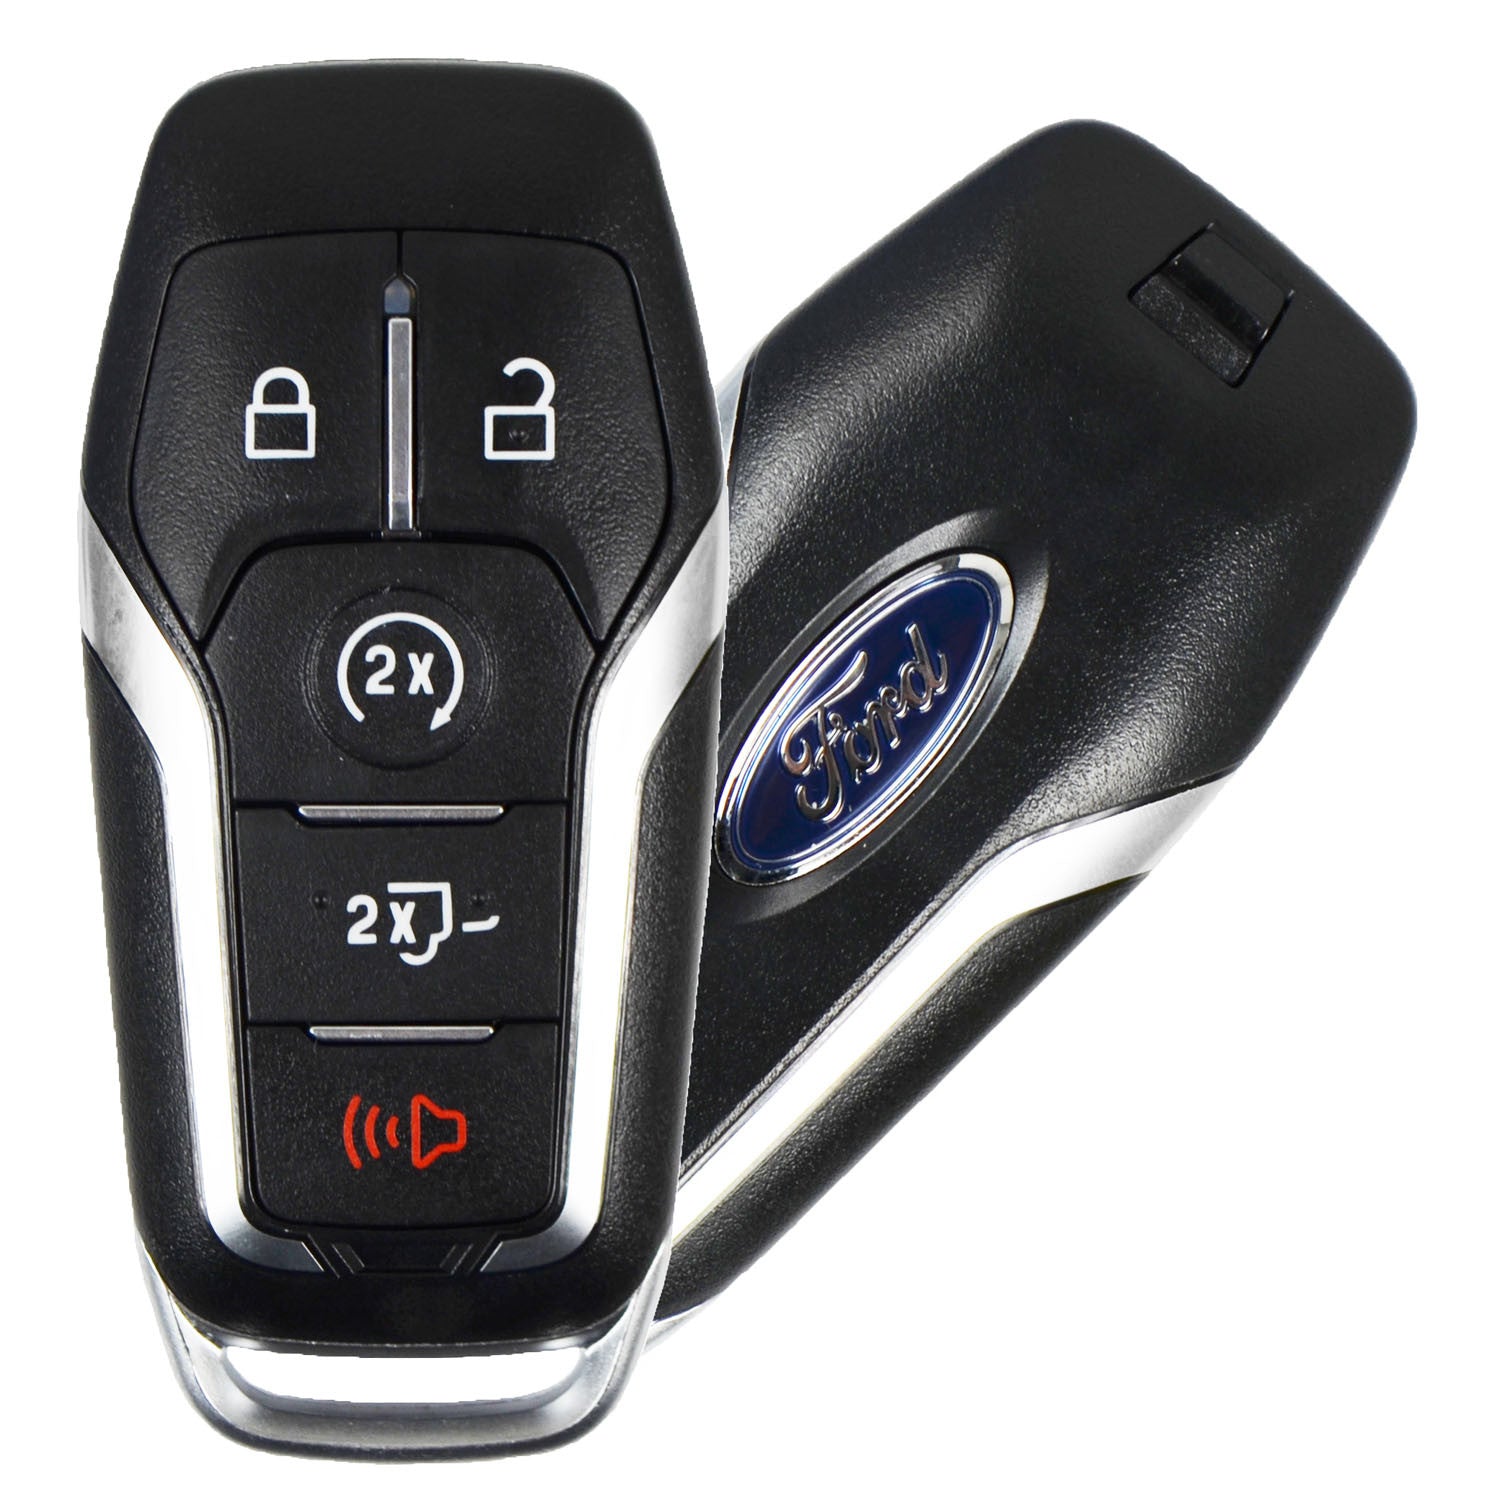 Ford 2015 - 2016 F-Series 5 Btn Proximity Remote w/ Insert Key - FCC ID: M3N-A2C31243300 - ZIPPY LOCKSHOP